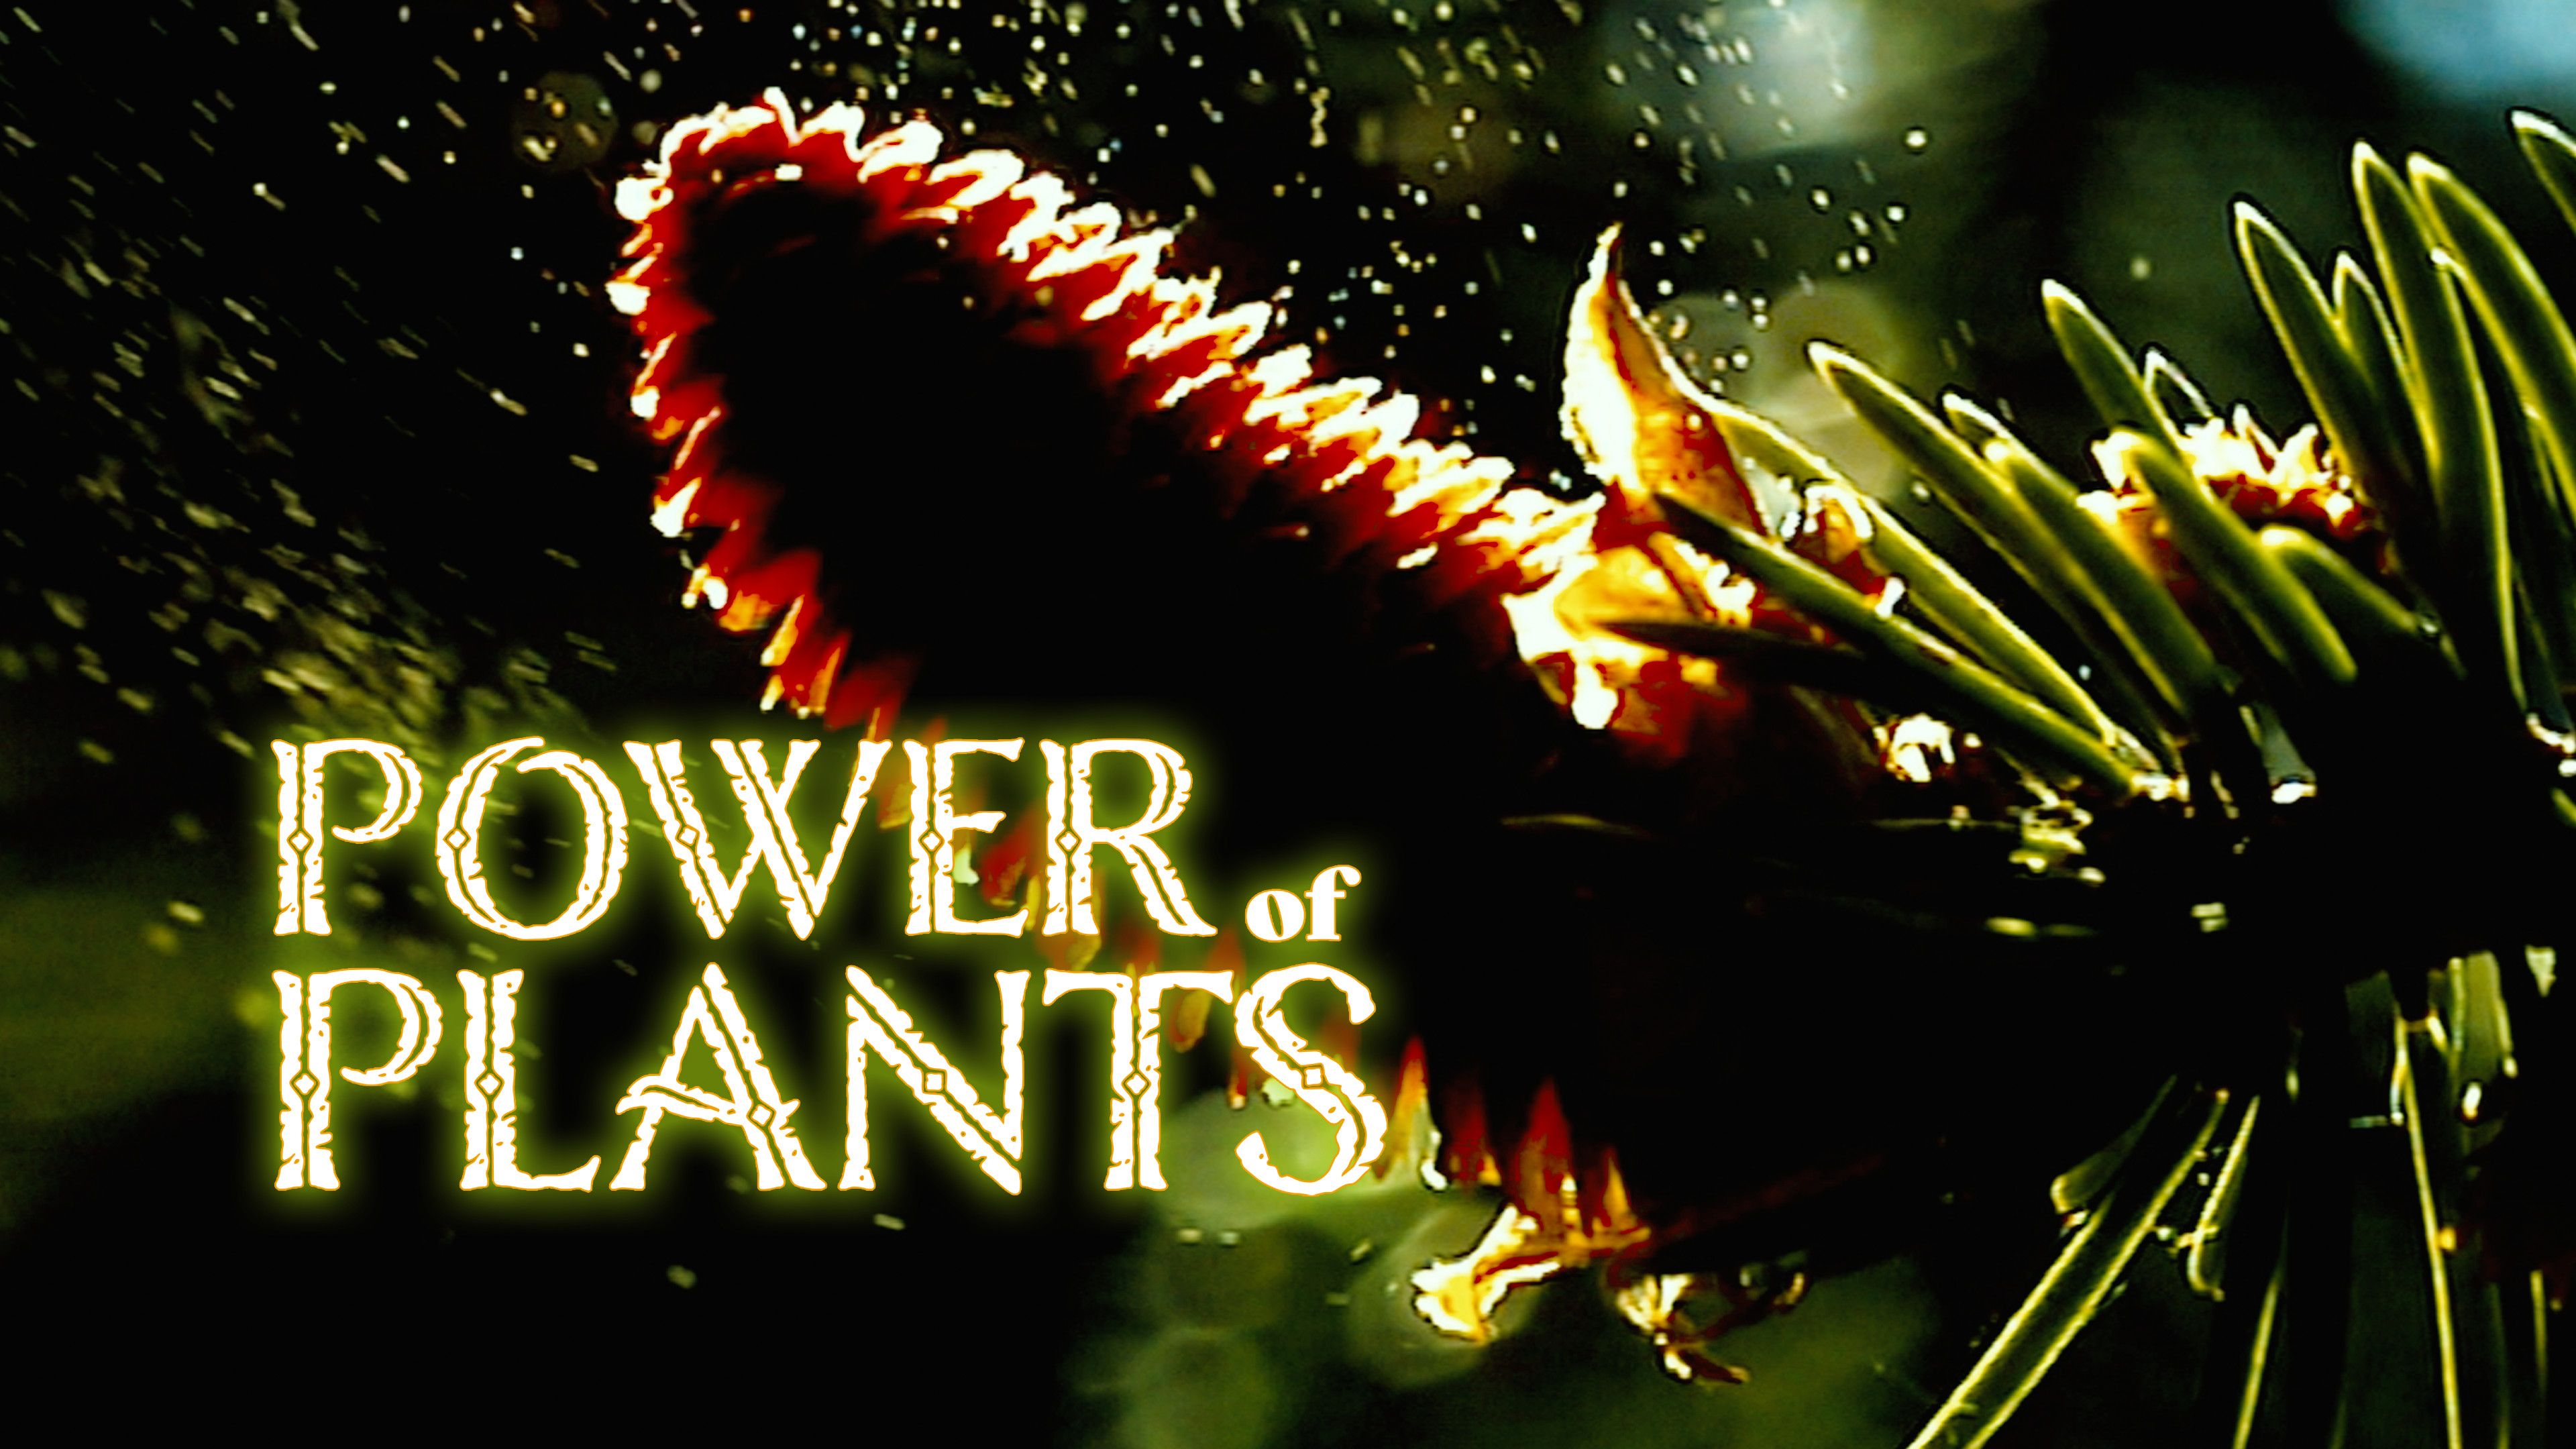 Power of Plants